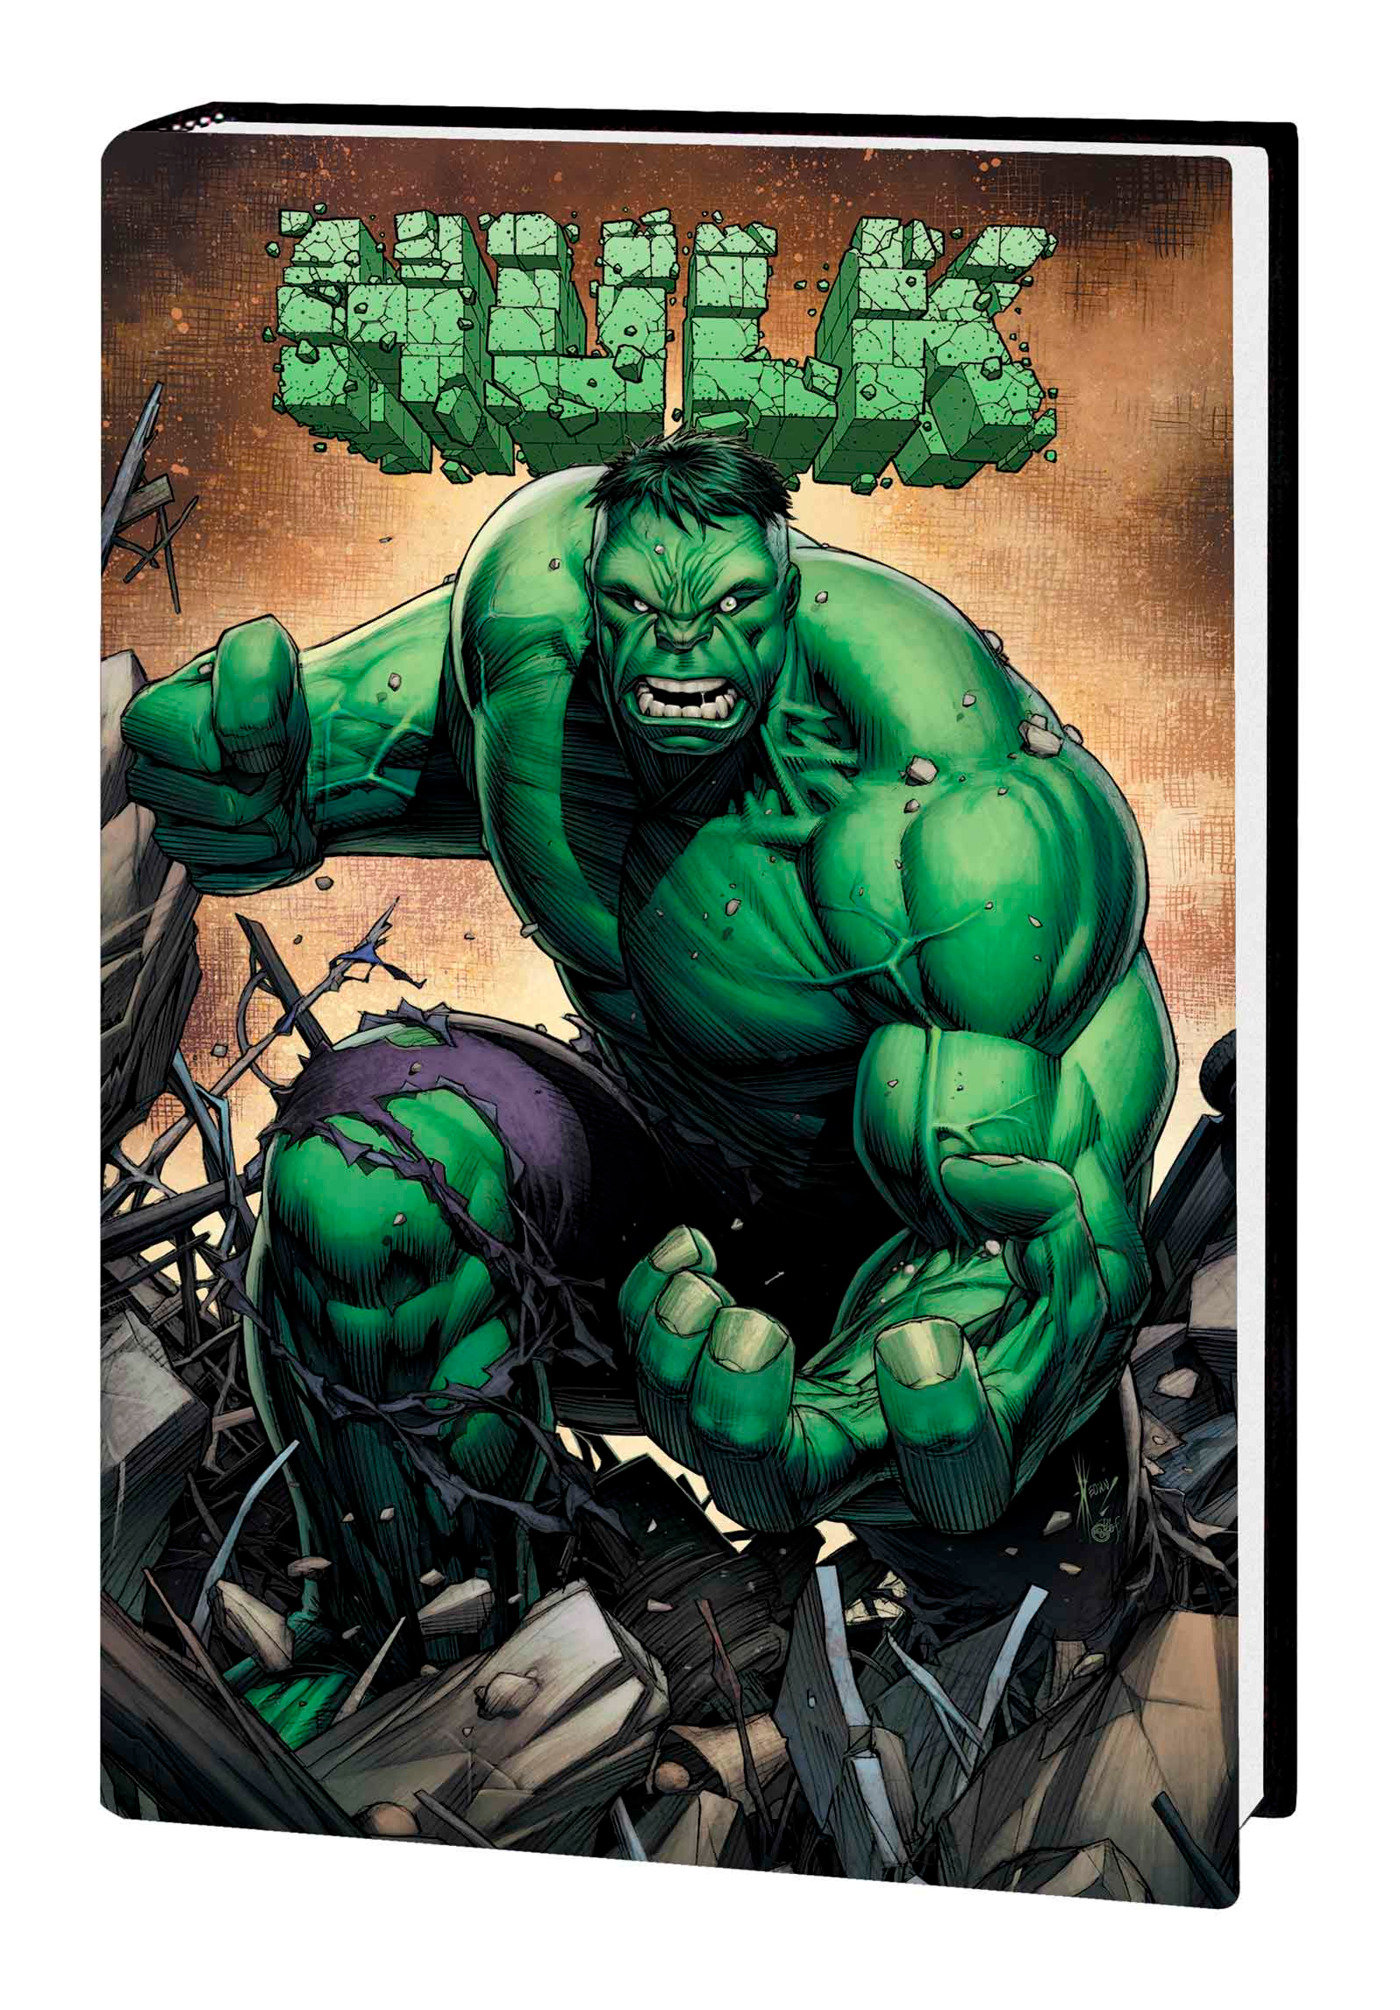 Incredible Hulk by Peter David Omnibus Hardcover Volume 5 Keown Direct Market Edition